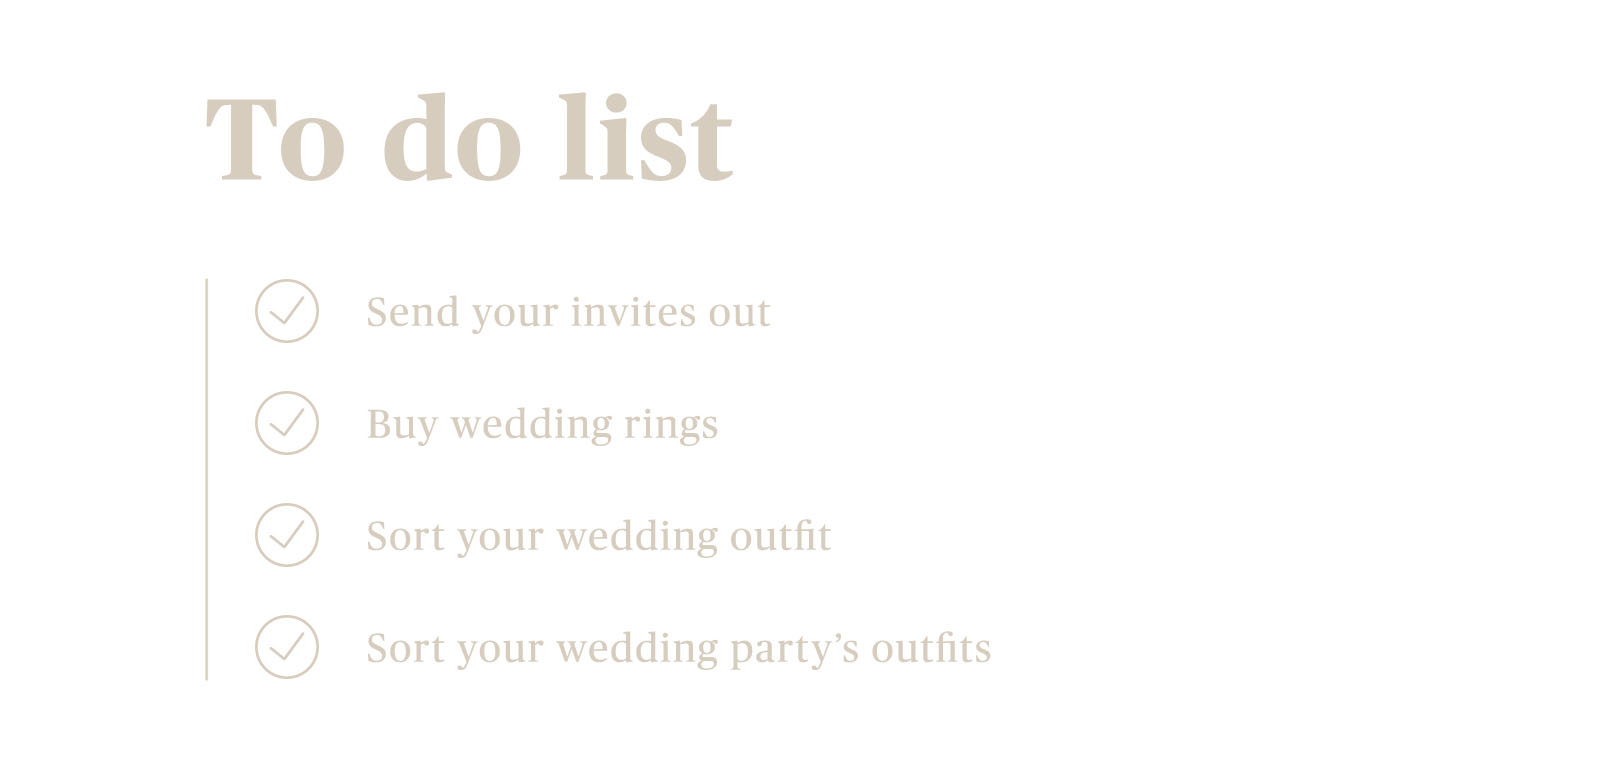 wedding planning checklist for grooms